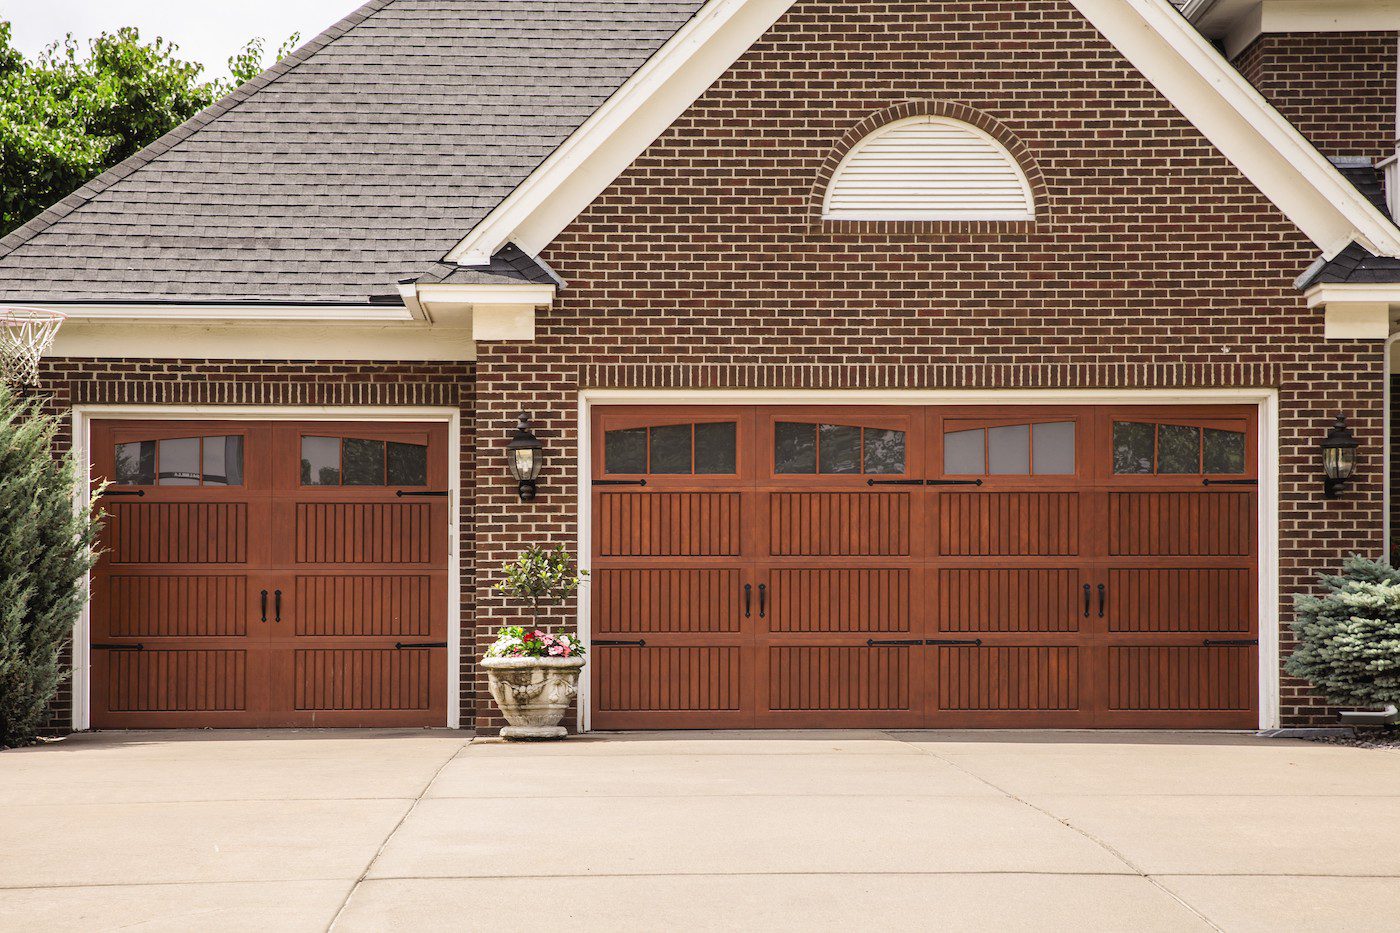 Impression Fiberglass Collection® Garage Door by the Overhead Door Company - Color is of cherry wood. The home is dark brown brick.